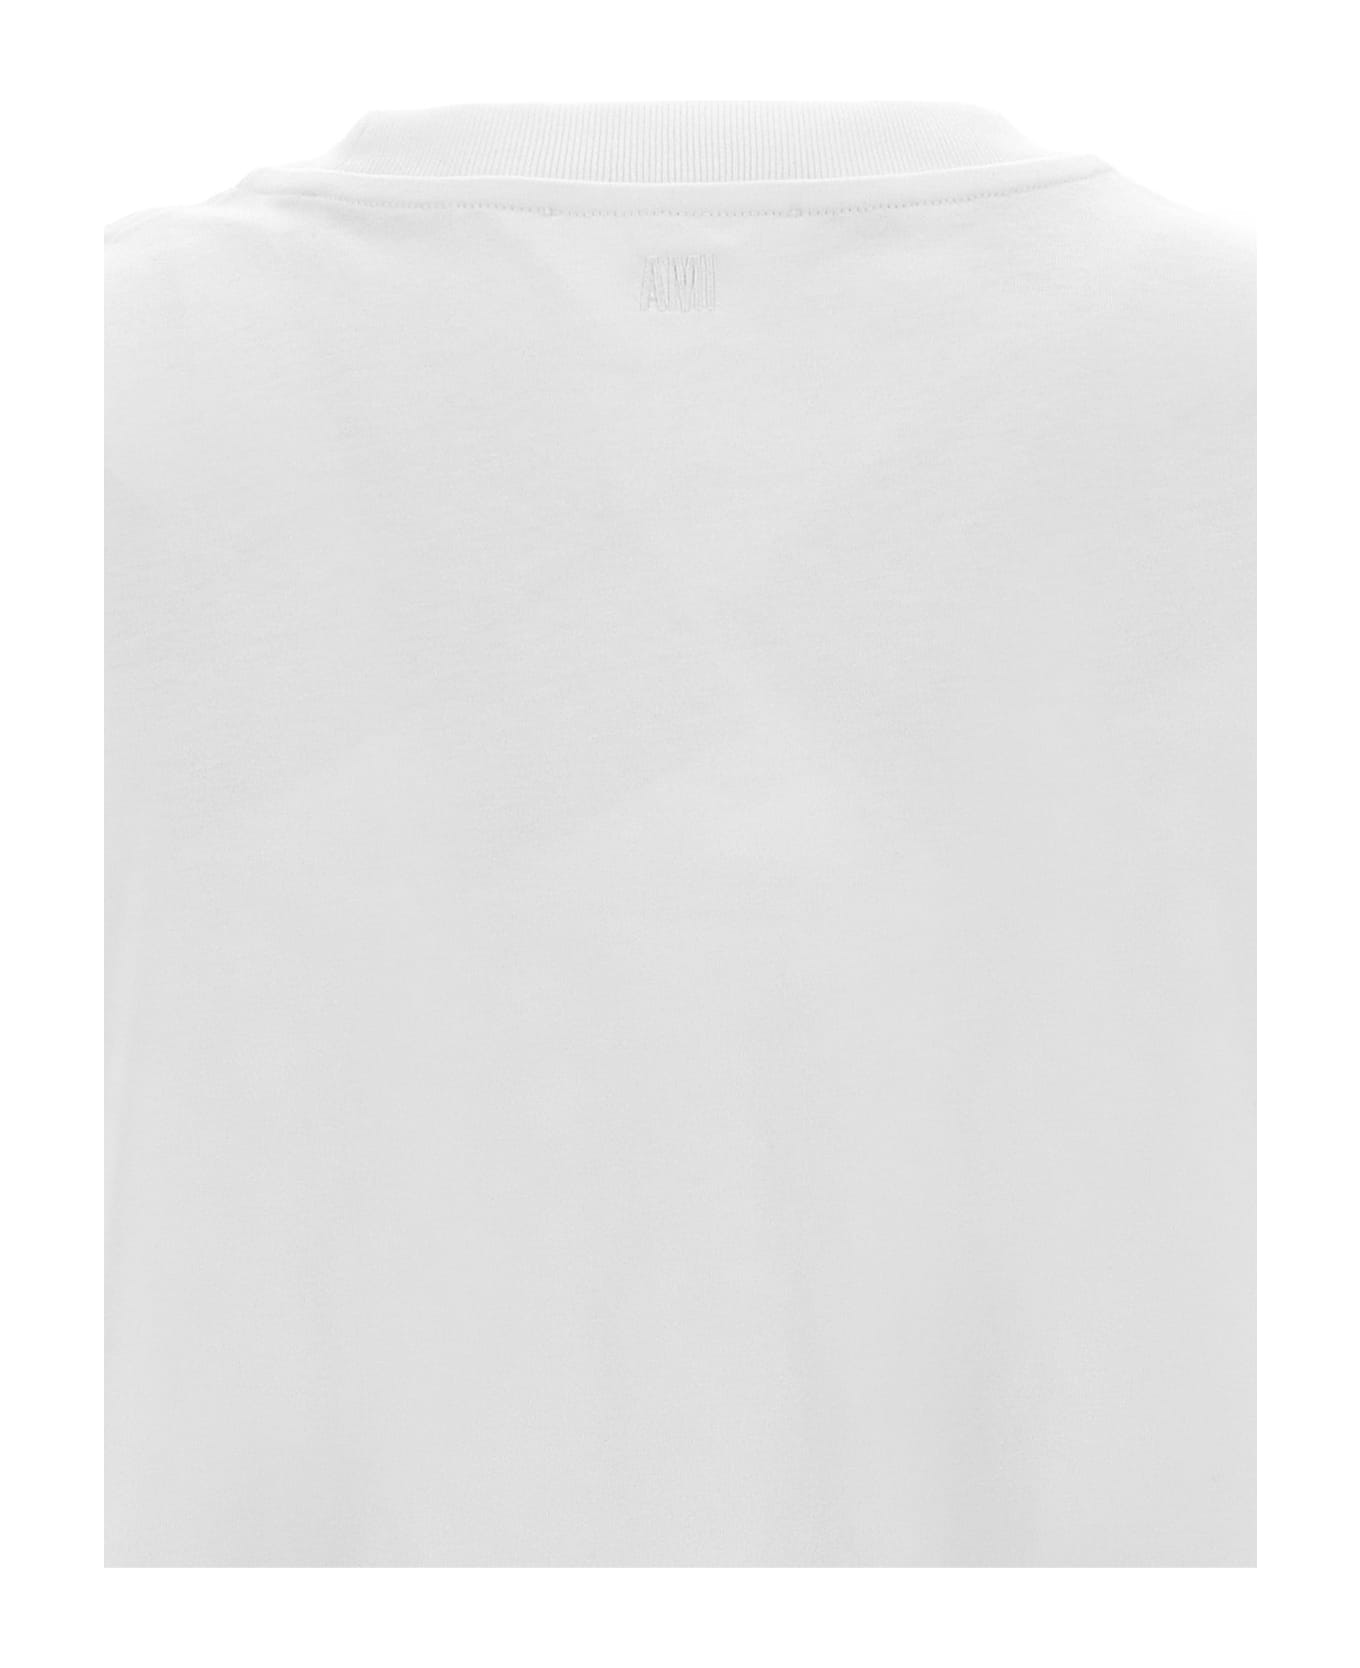 Ami Alexandre Mattiussi 'ami De Coeur' T-shirt - White シャツ